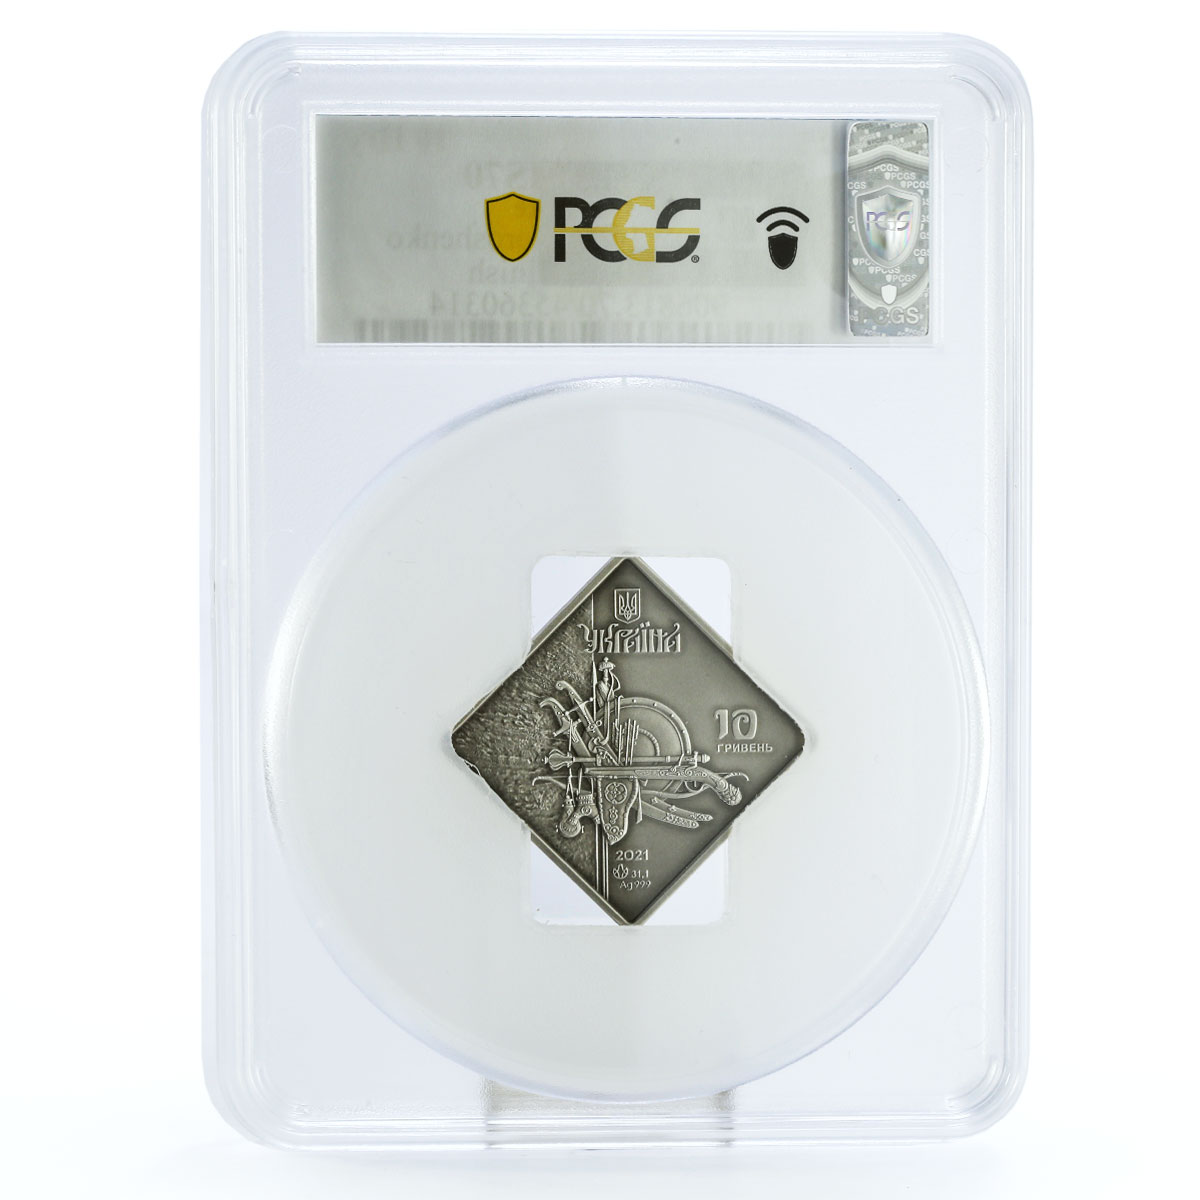 Ukraine 10 hryvnias Cossack Regalias Getmans Doroshenko MS70 PCGS Ag coin 2021